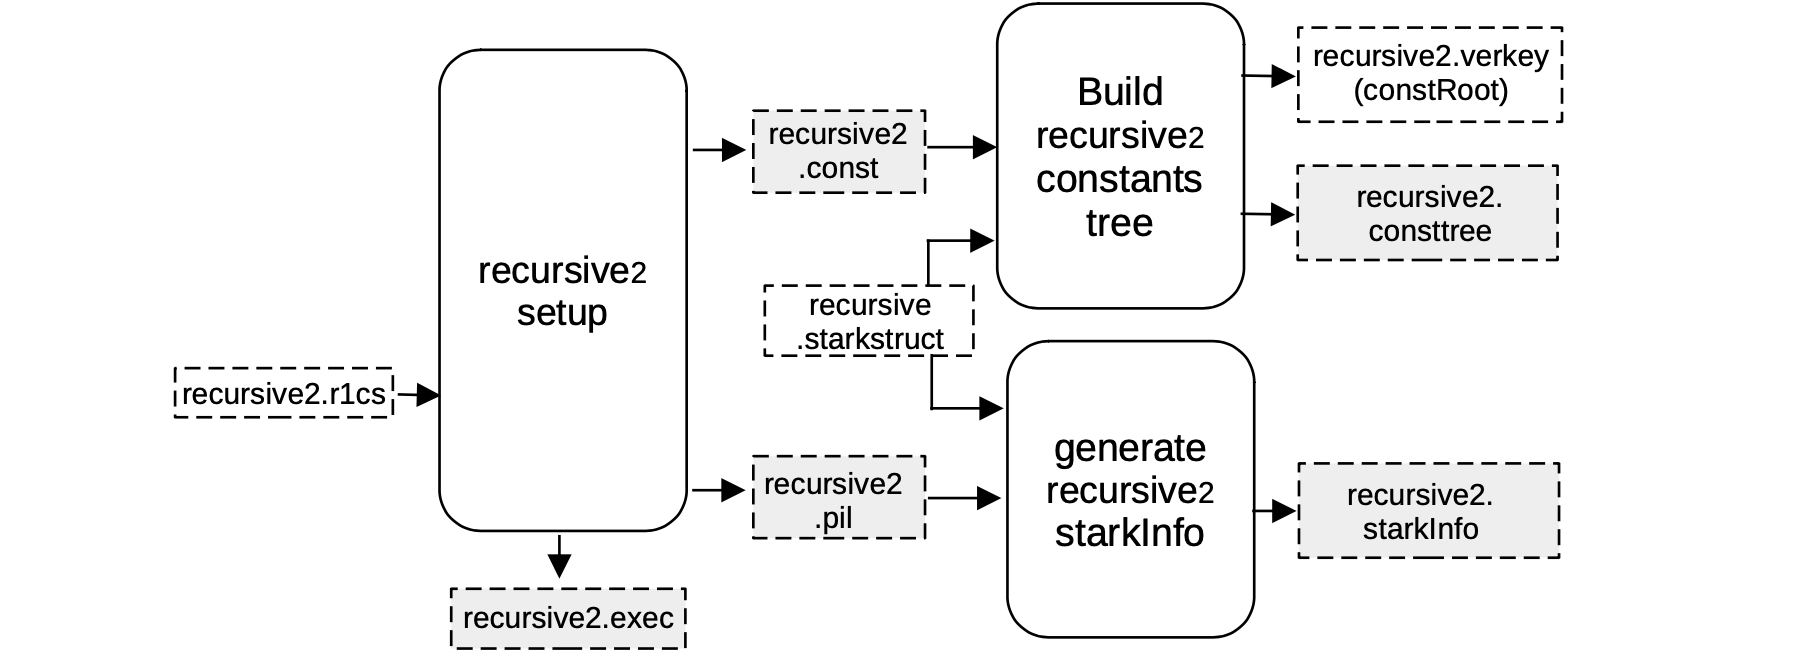 Convert the recursive2 circuit to its associated STARK.